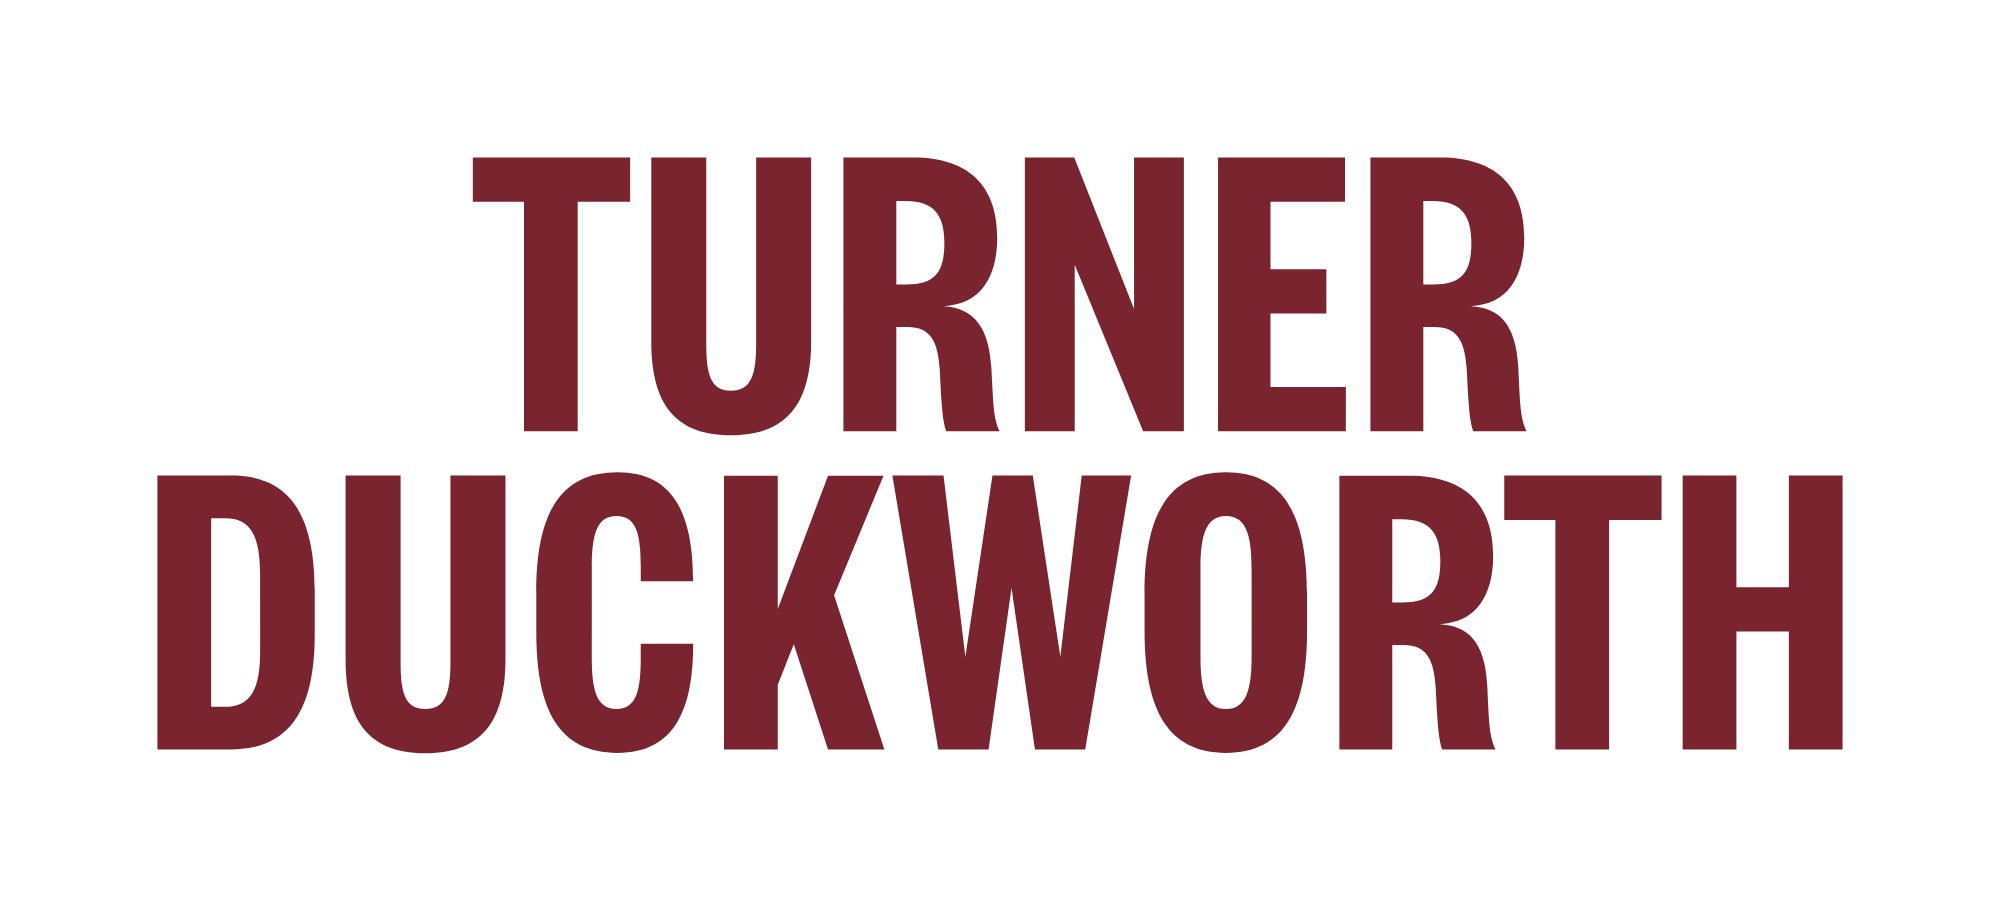 Turner Duckworth Distinctive Design Award